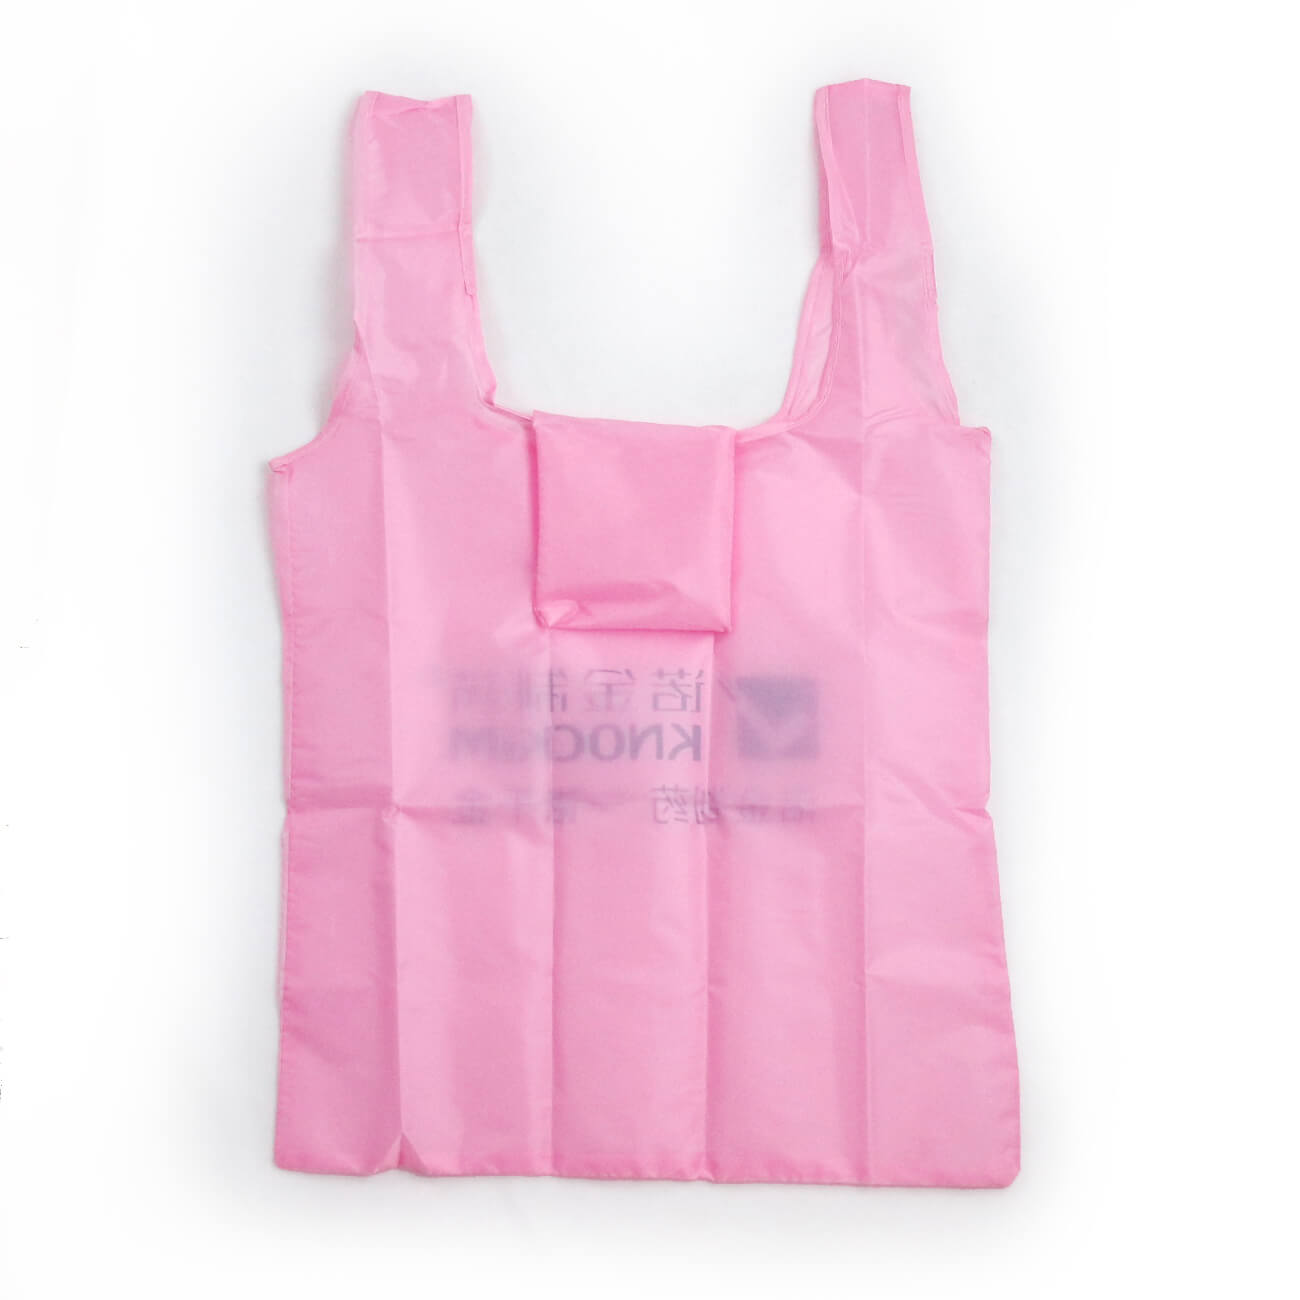 Reusable shopping bag in a pouch